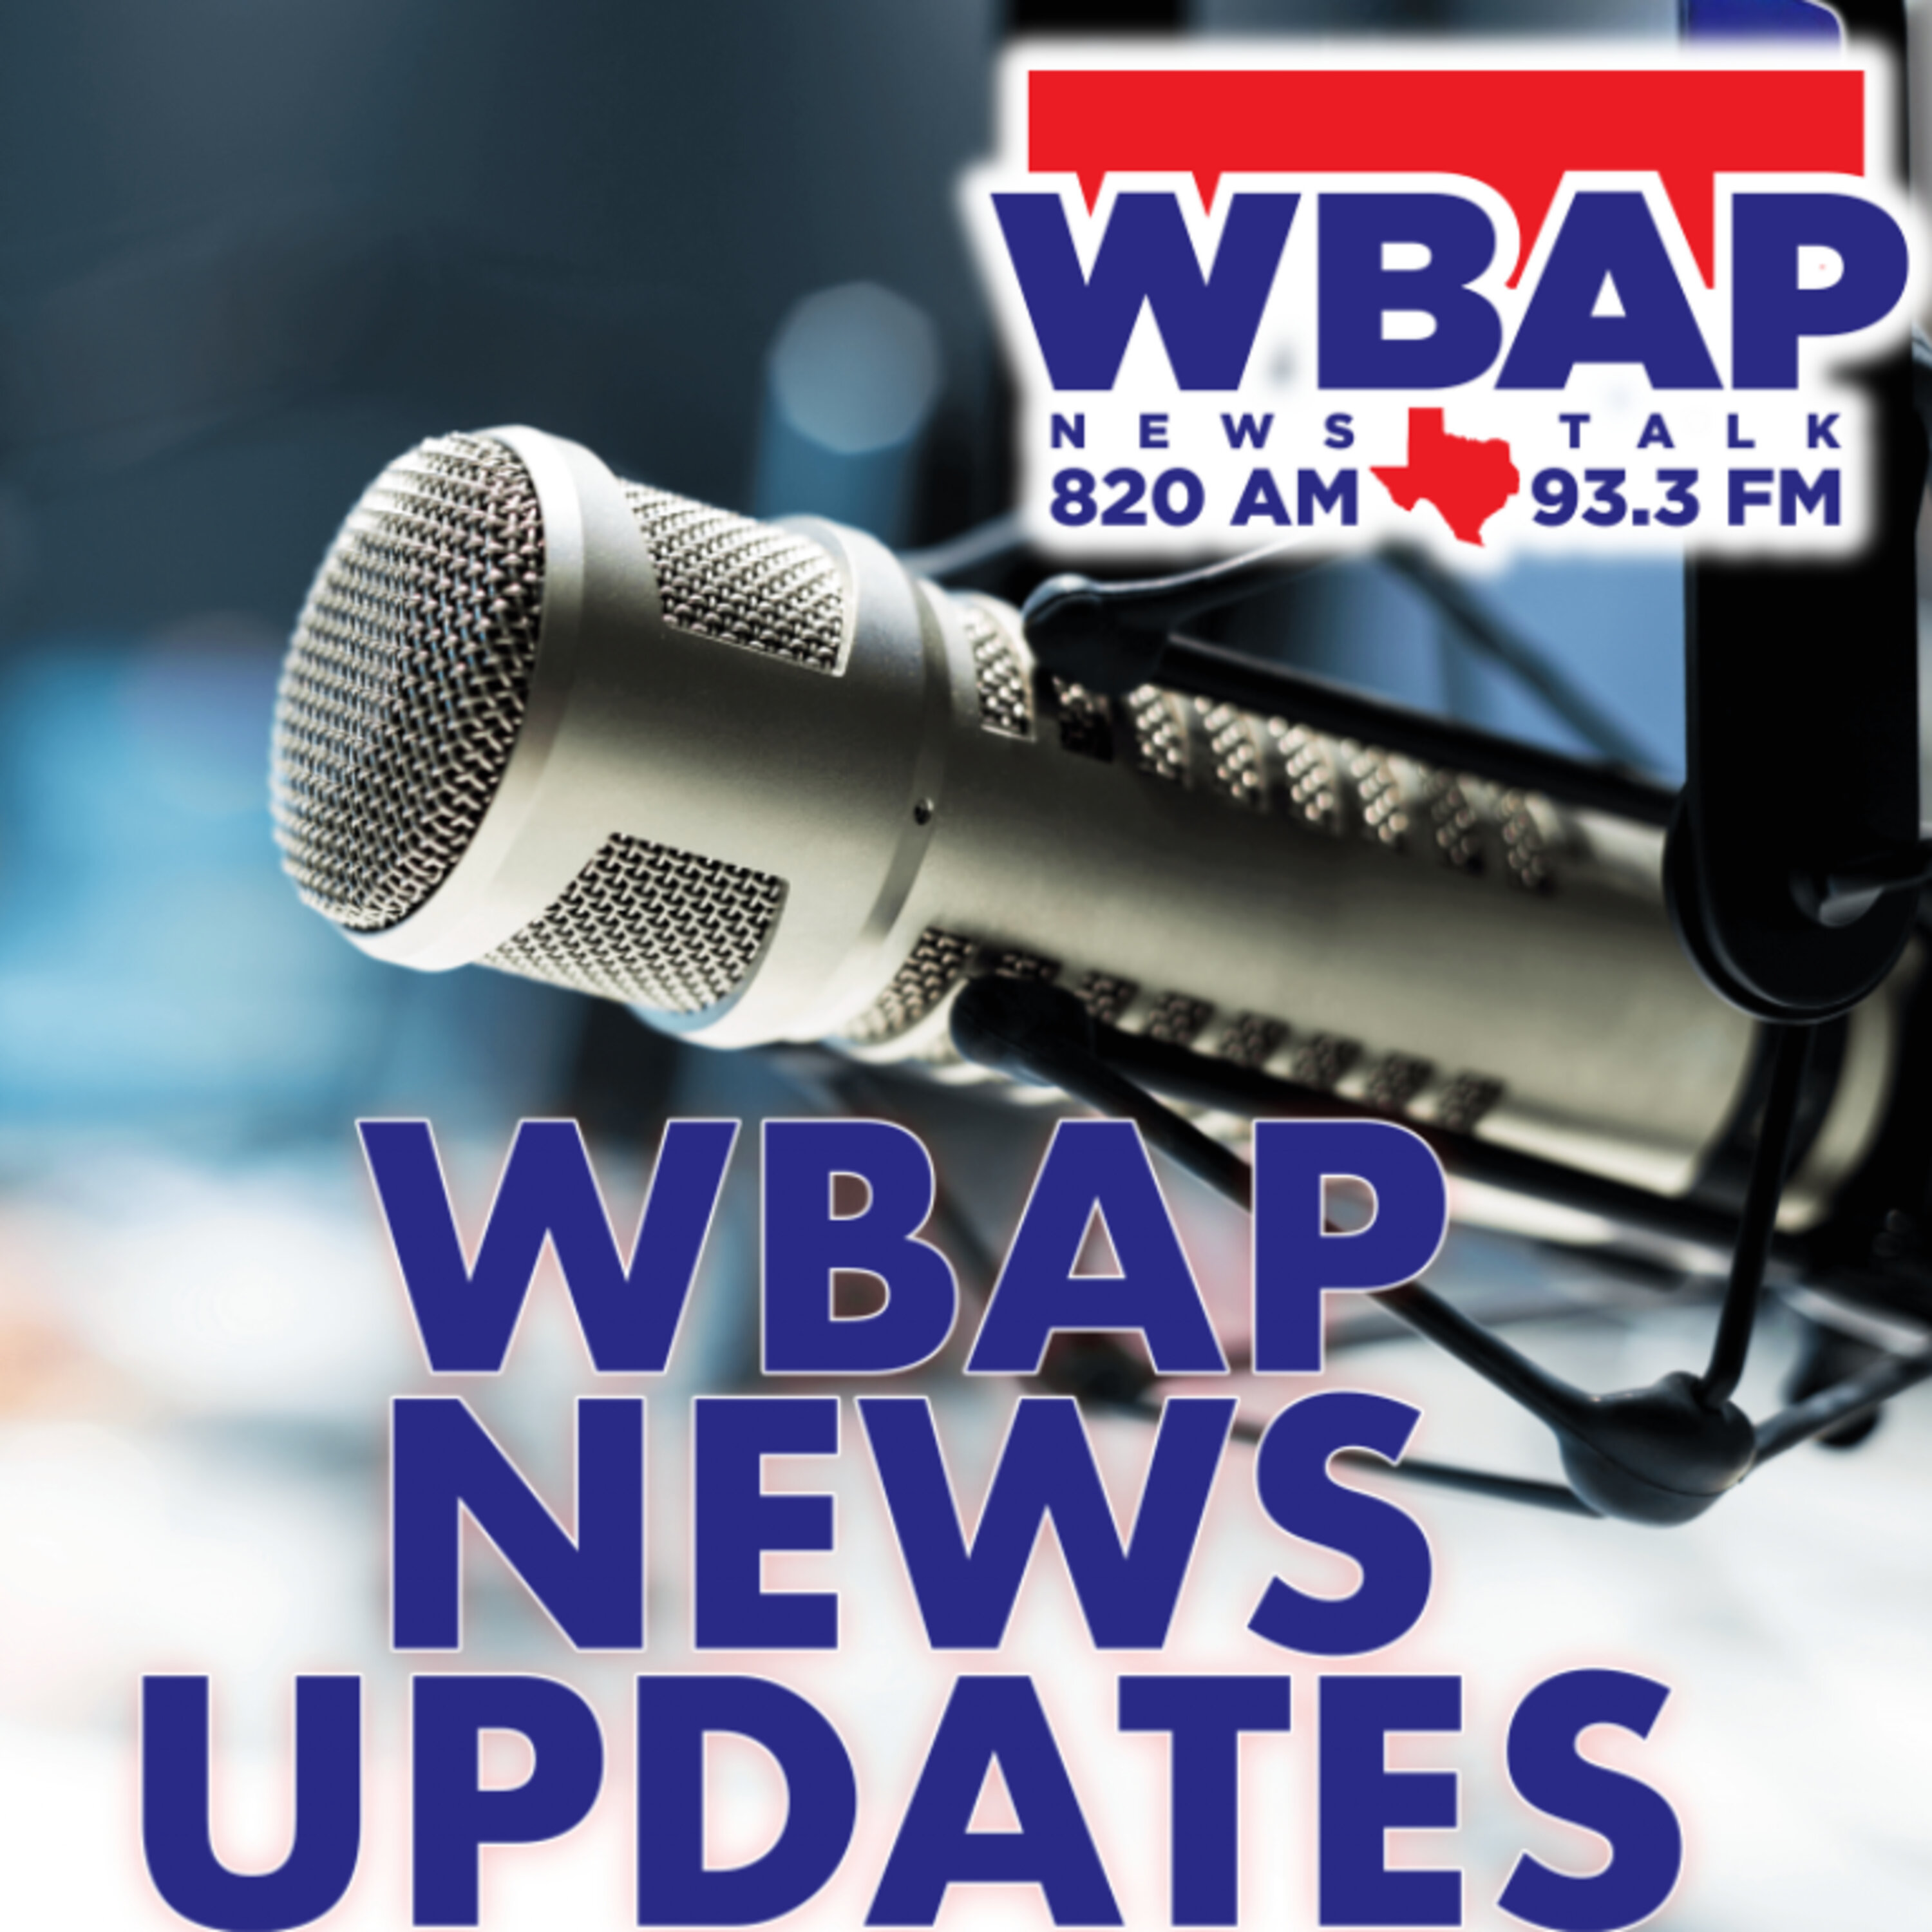 WBAP News Updates